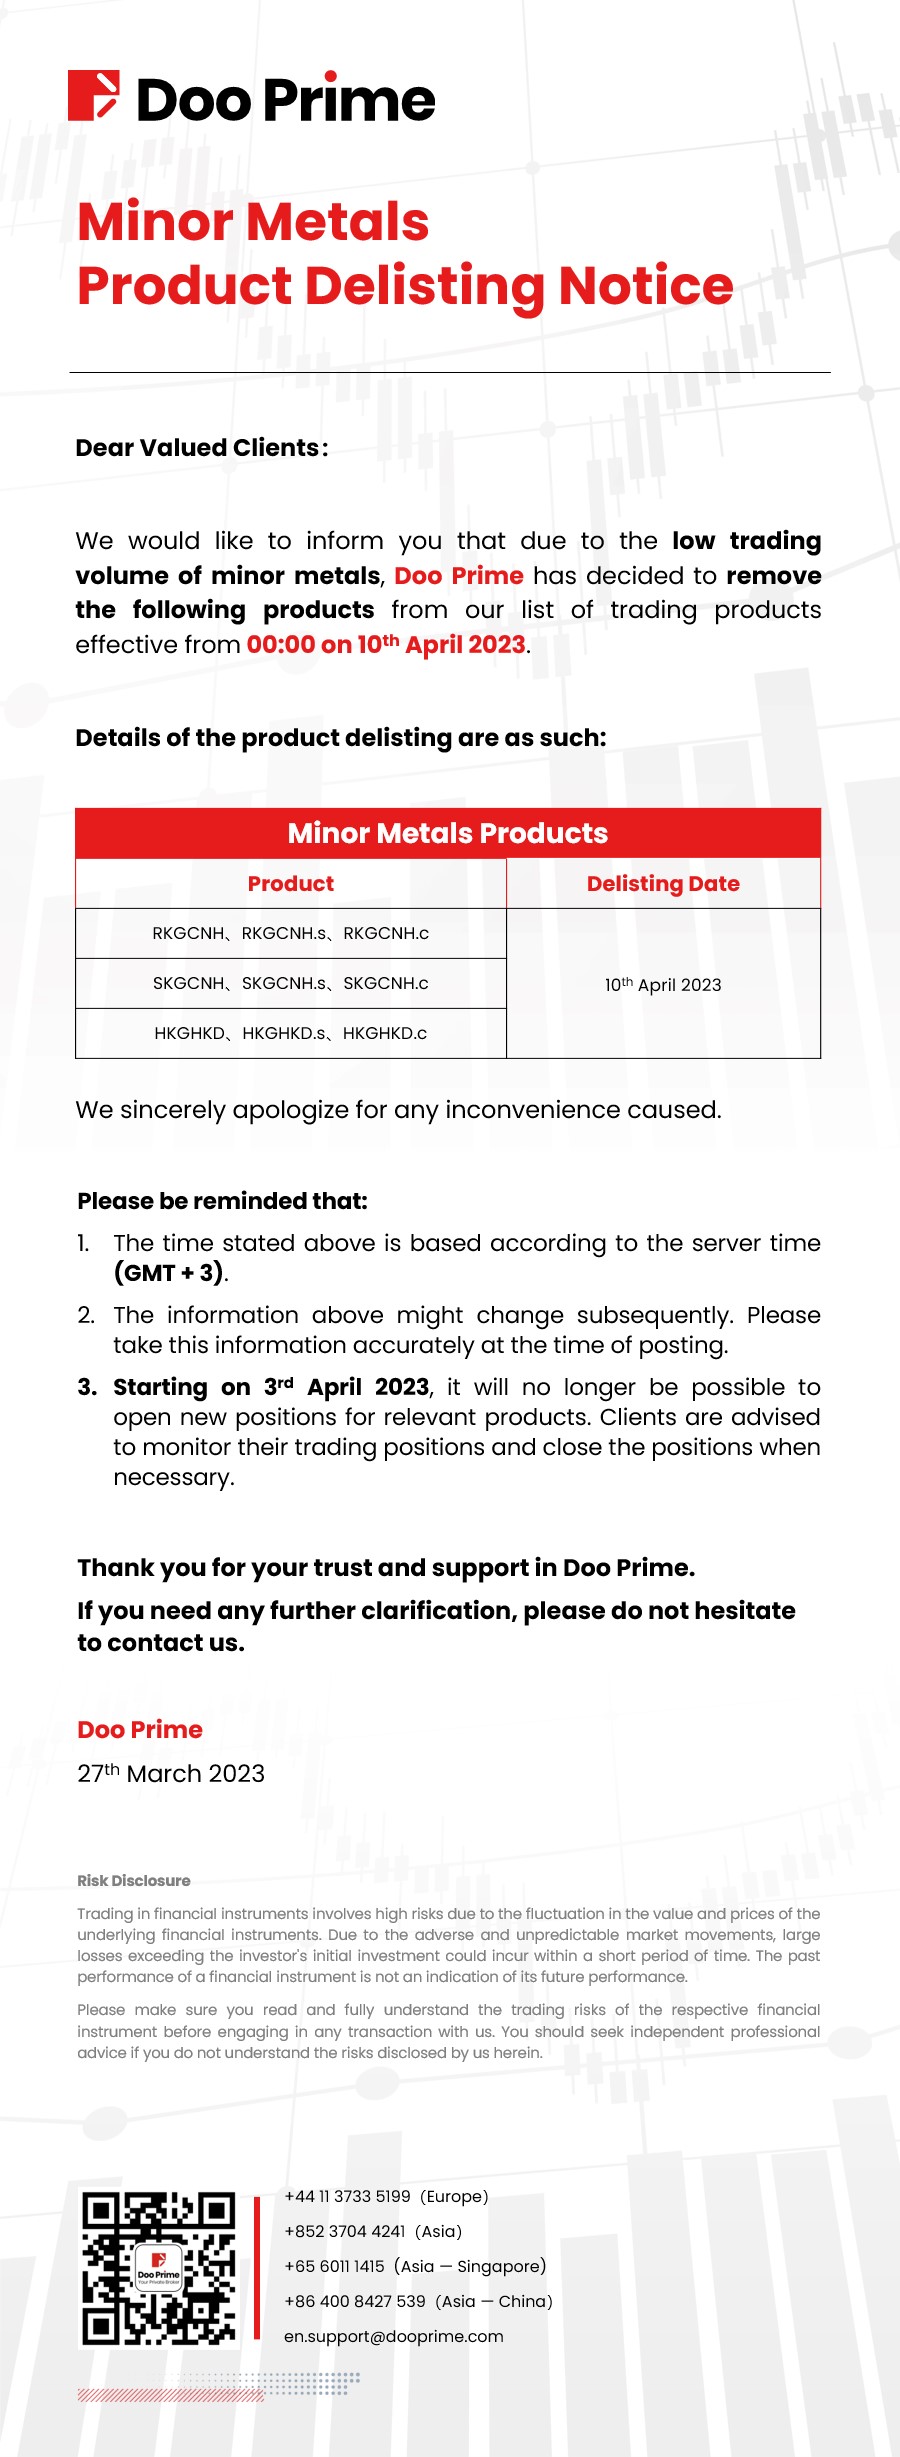 Doo Prime Minor Metals Product Delisting Notice